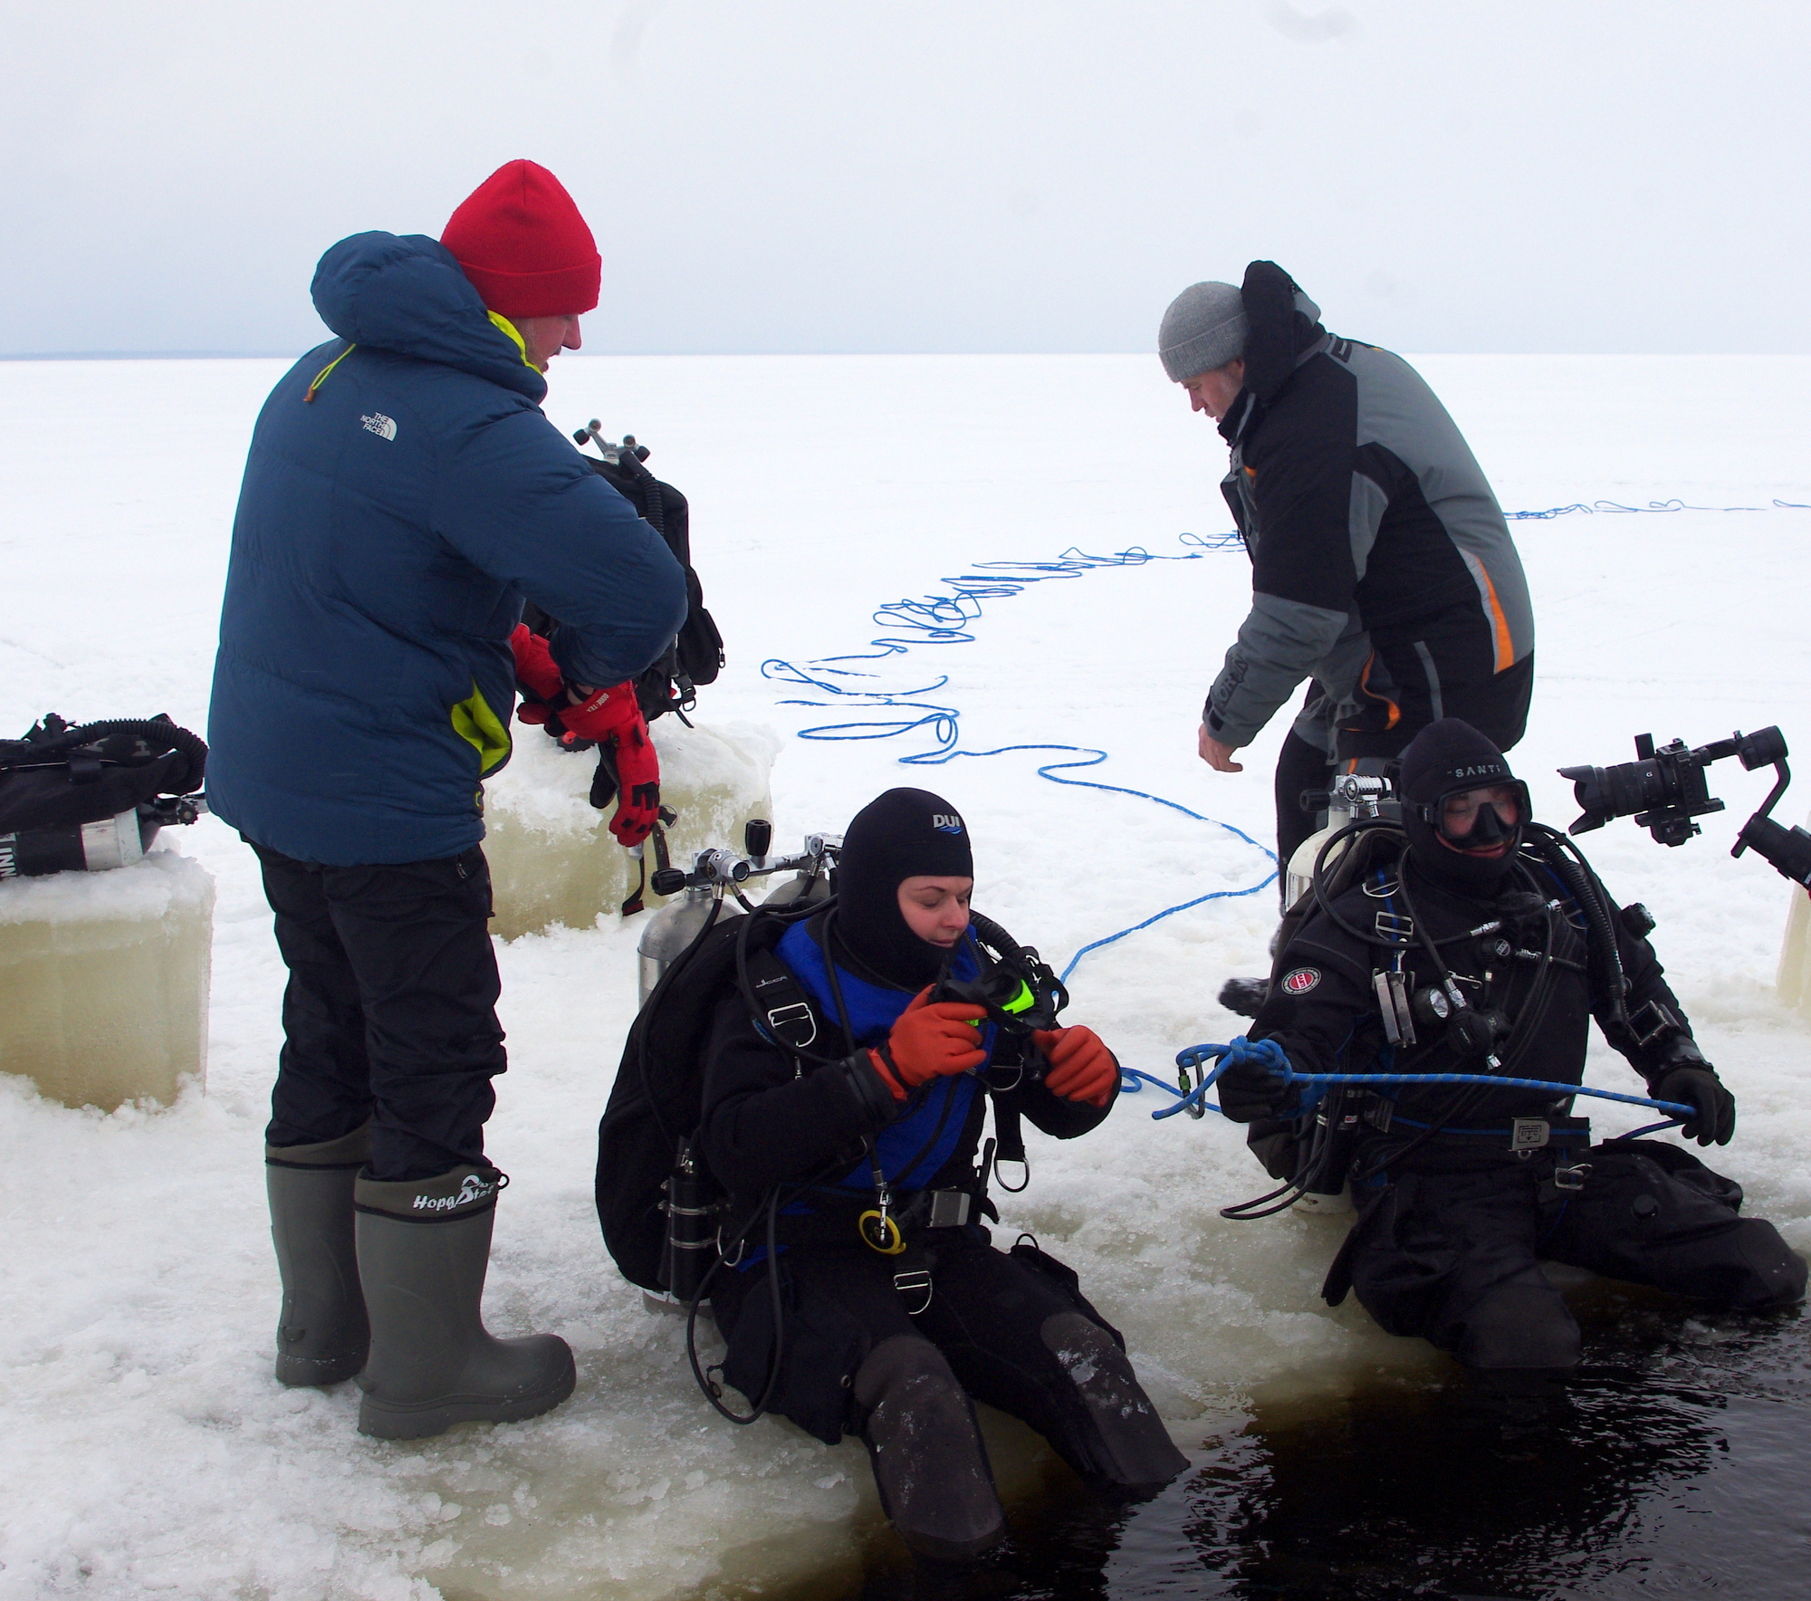 Выход на лед на рыбинском водохранилище. Изучение Арктики. Проект Арктика. Ледяные поля Арктики. Рыбинское водохранилище Ярославль.